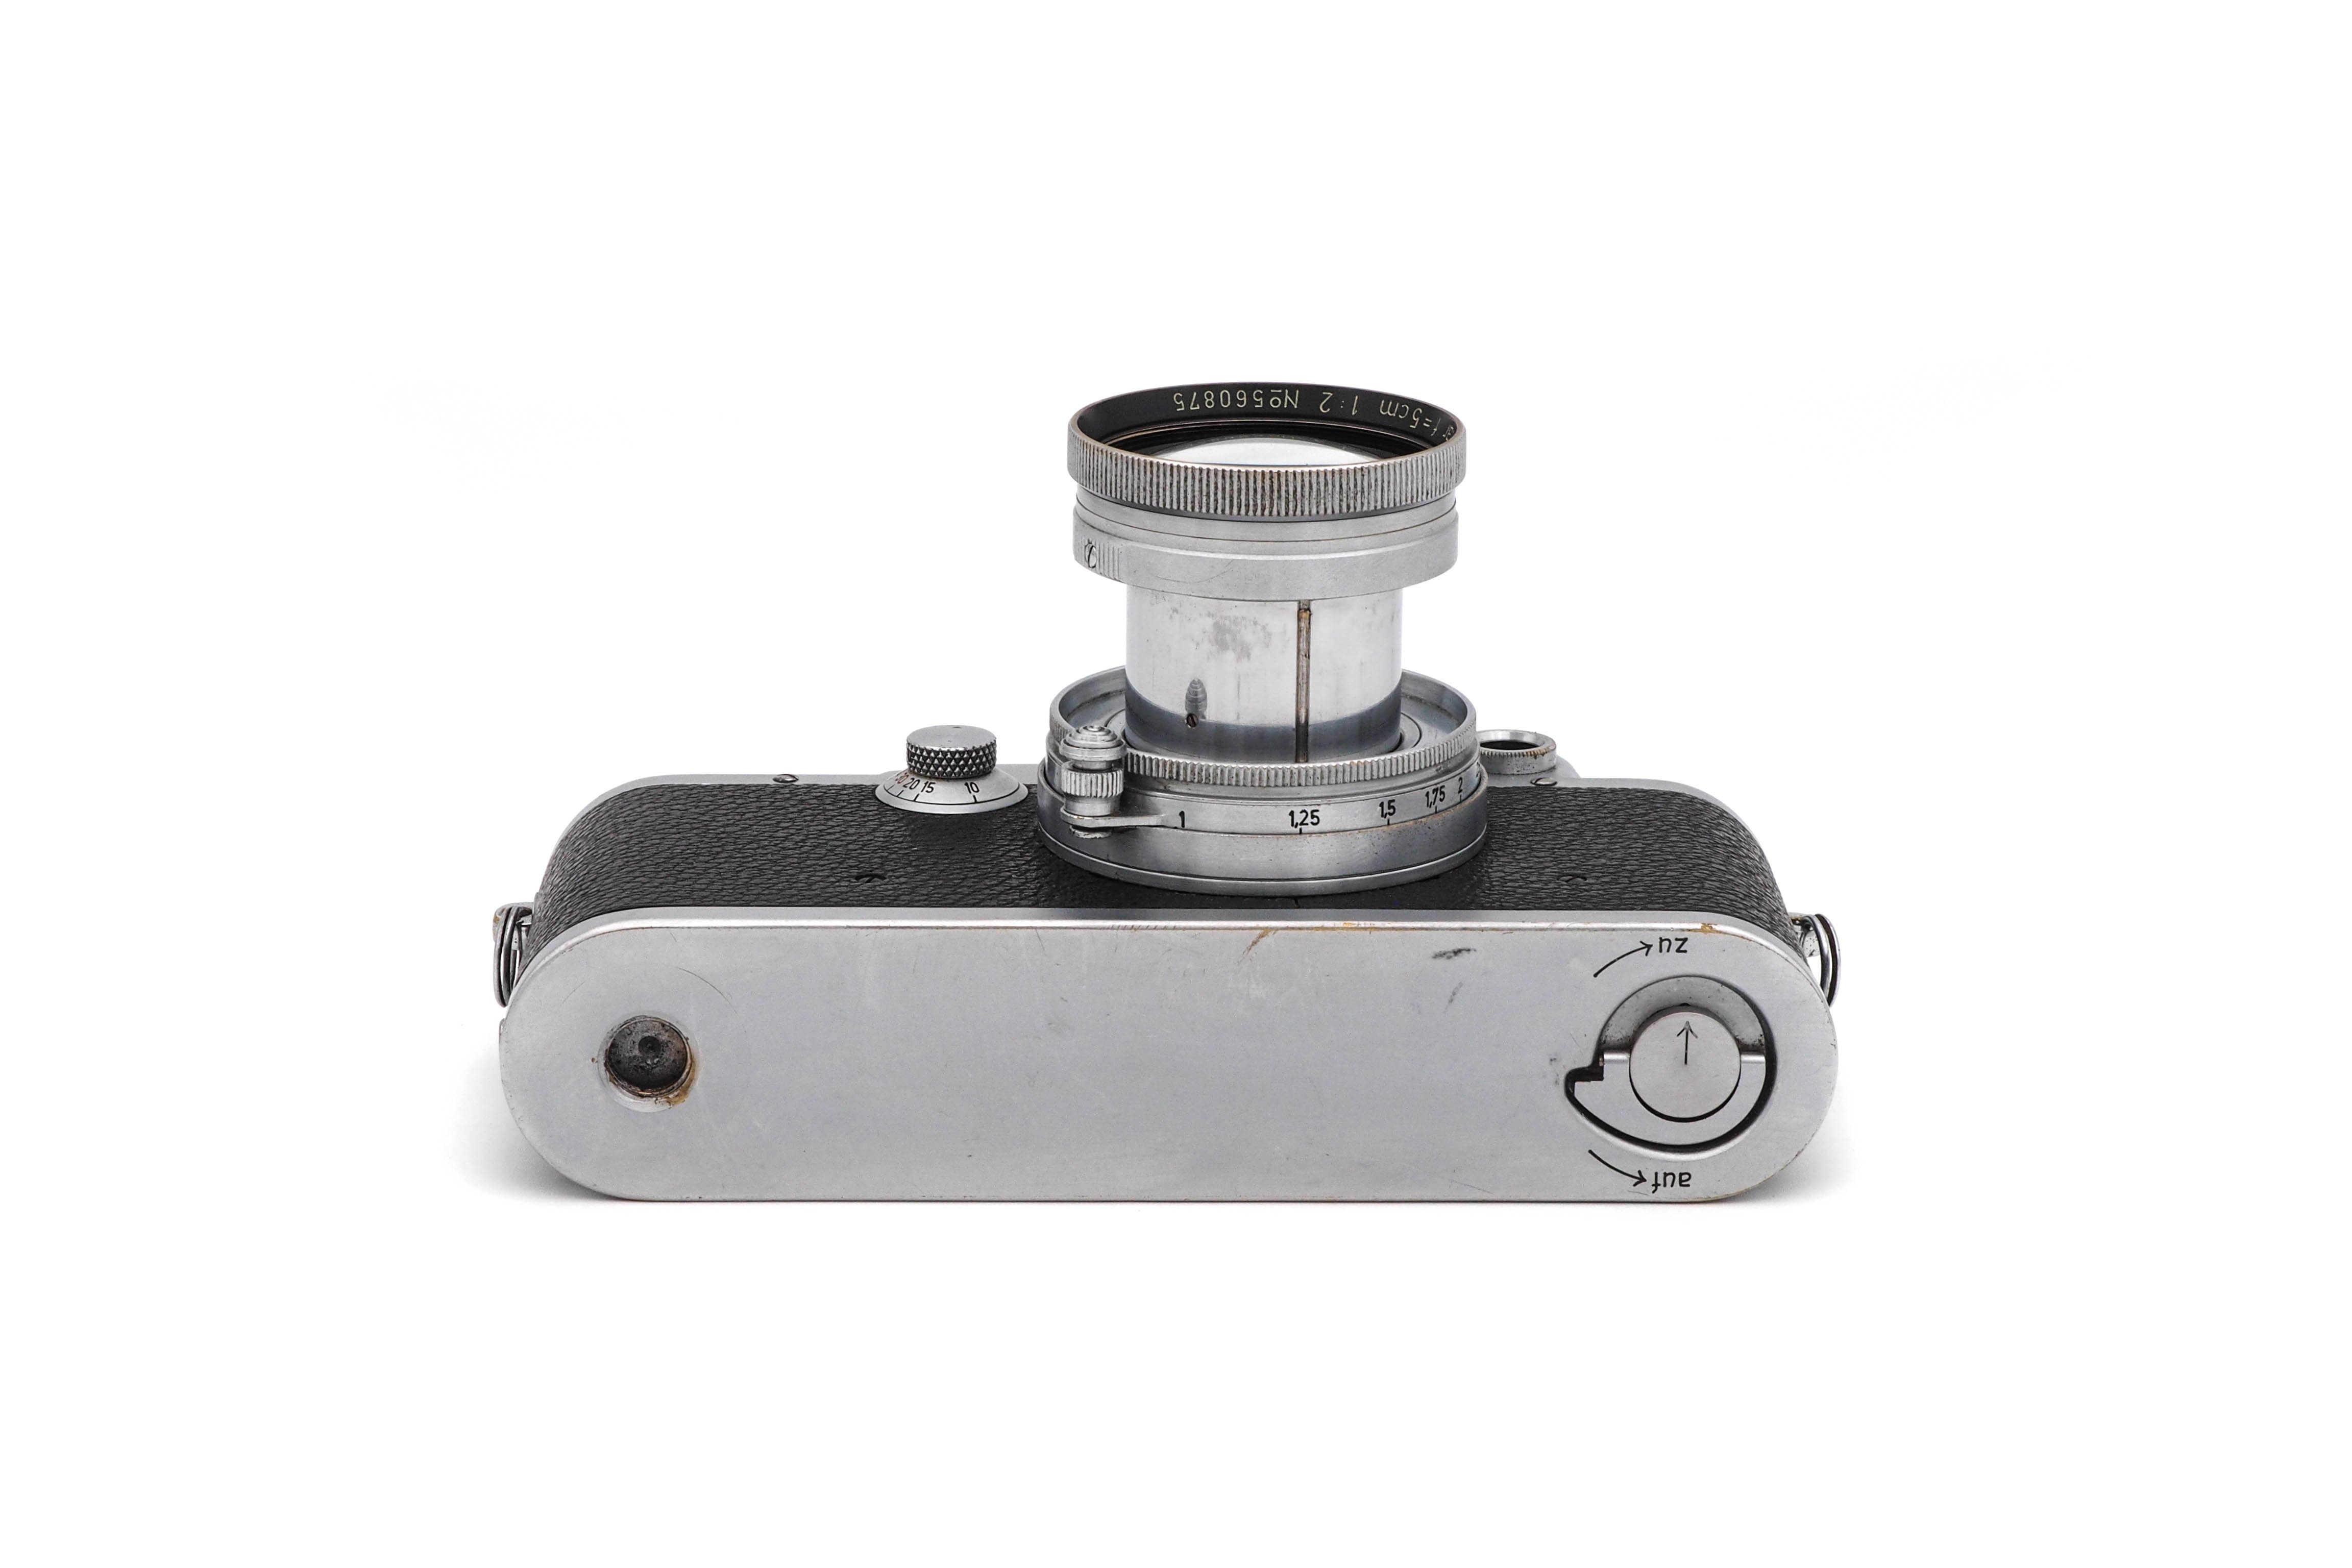 Leica IIIc (roter Verschlussvorhang) + Summitar 50mm f/2 1942